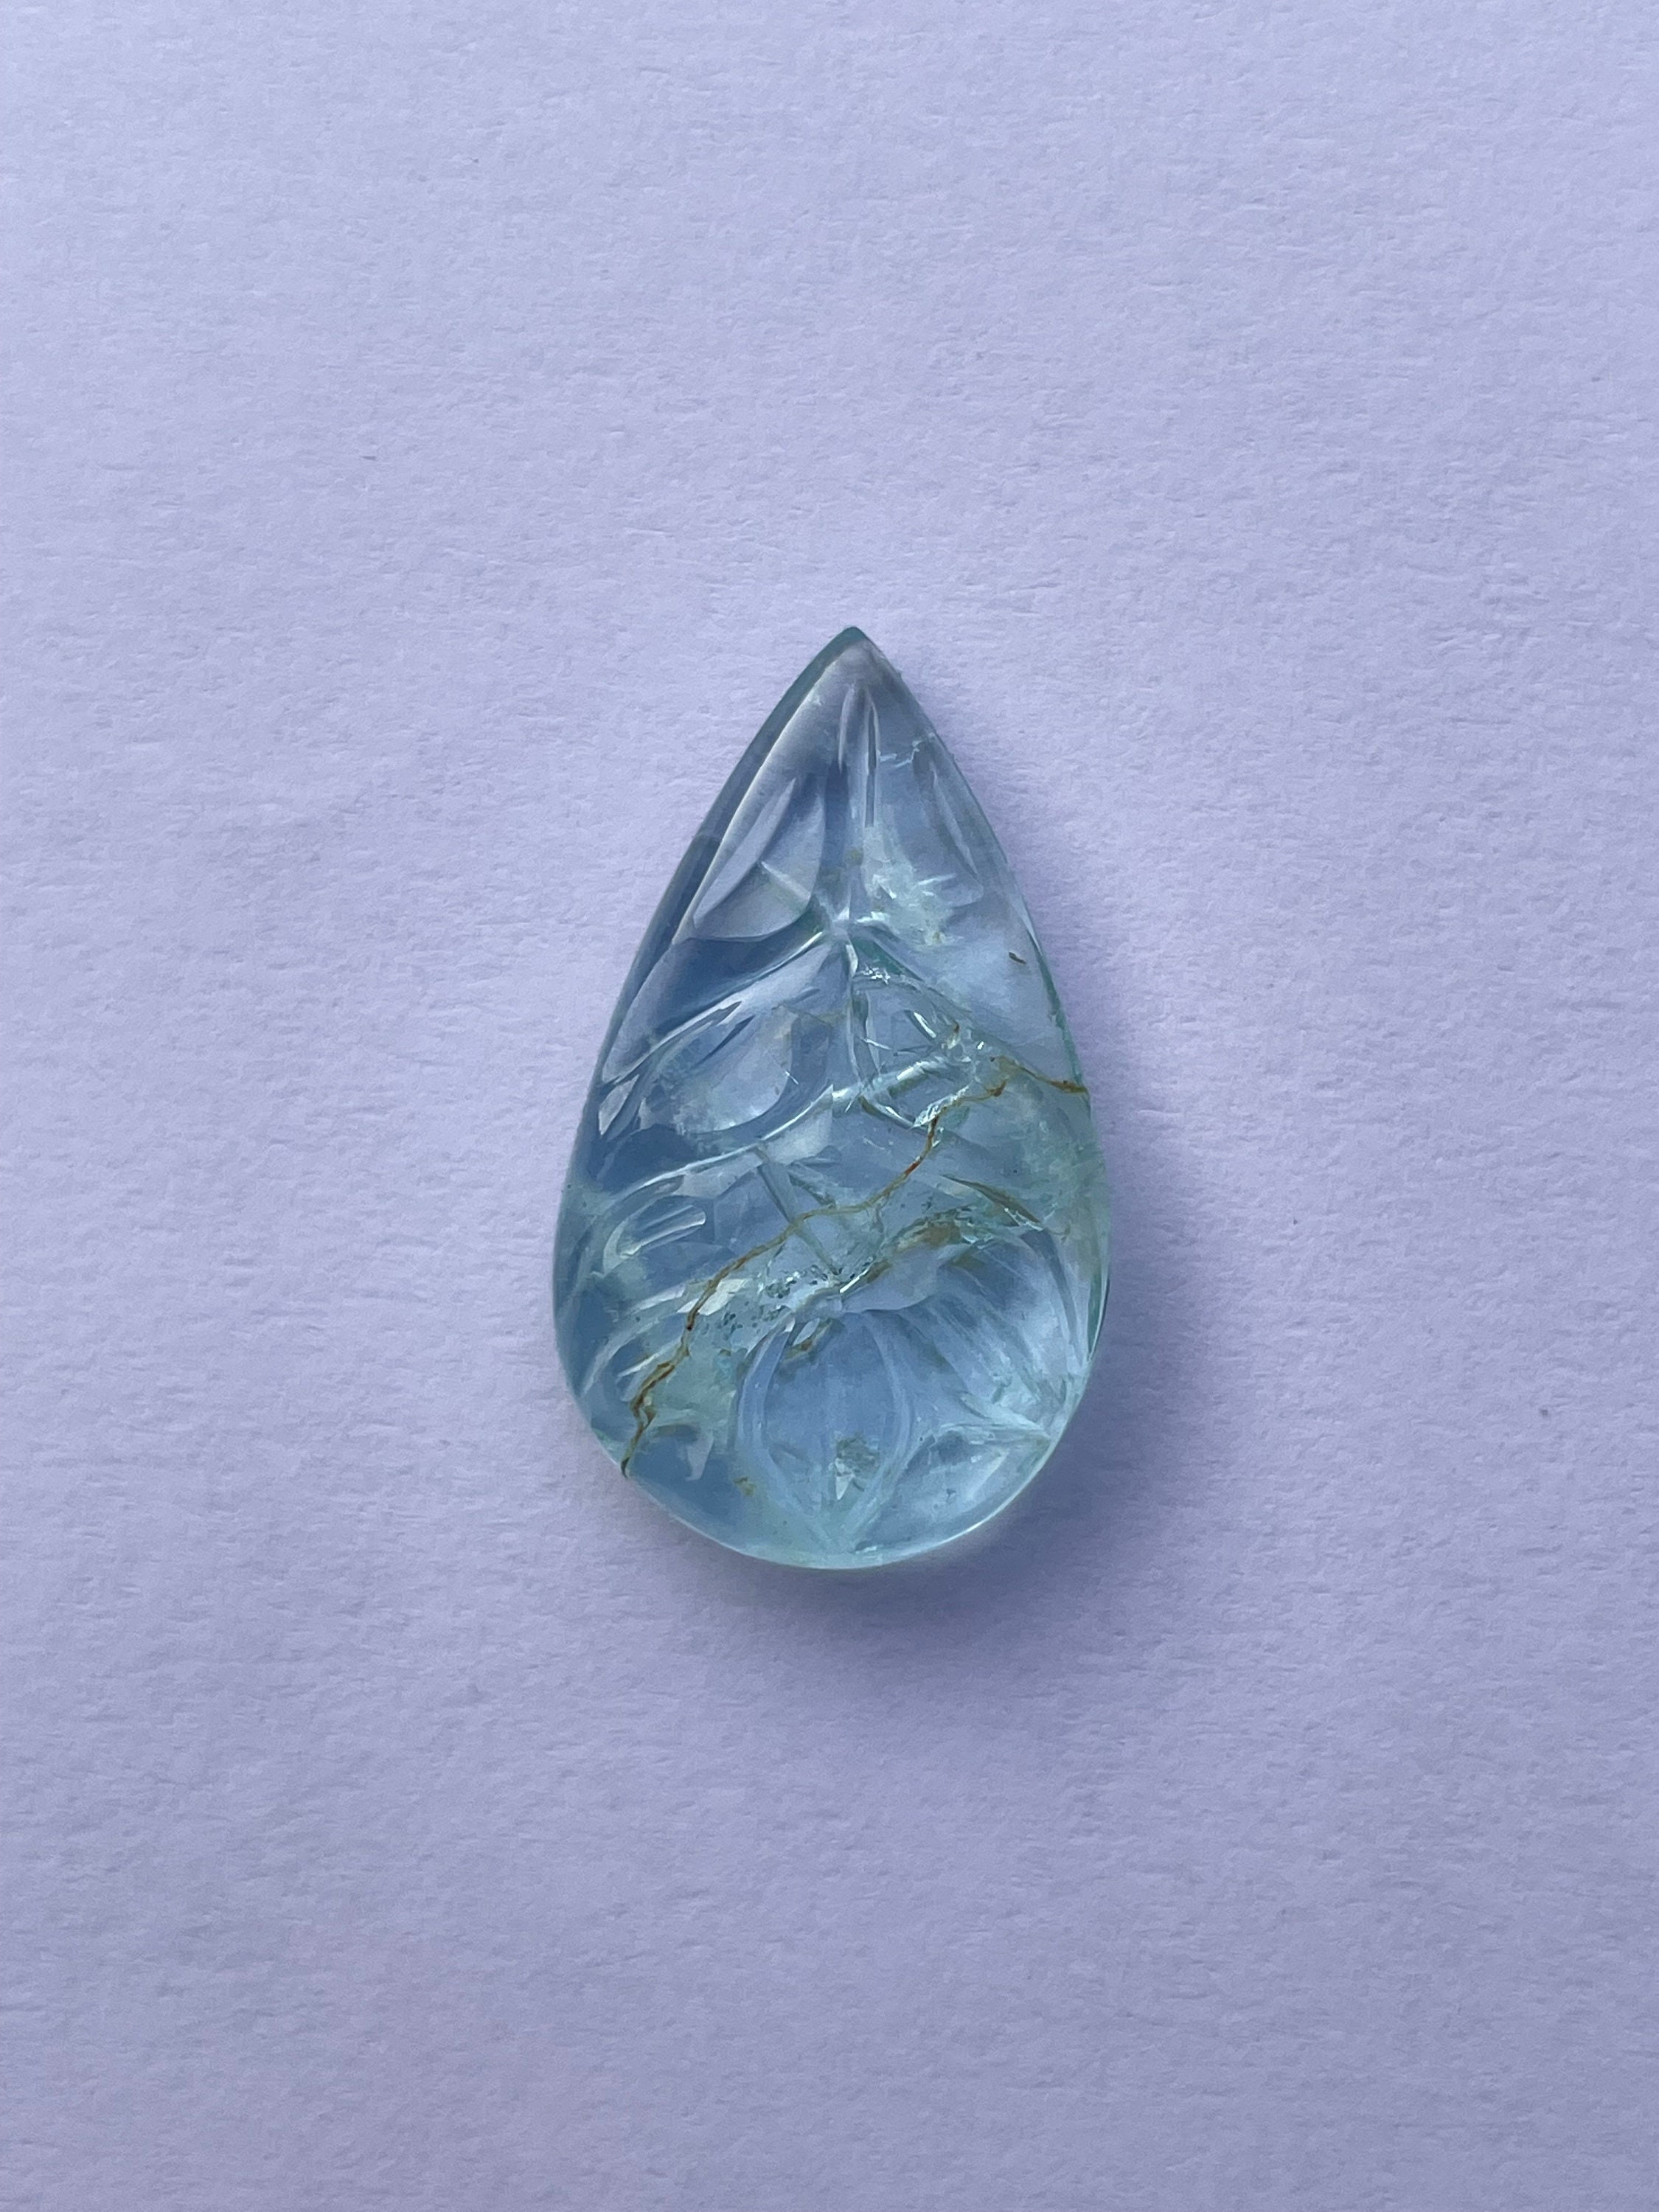 10.80 Carat Natural Aquamarine Carving Gemstone 20x14x6 MM Ring Size Pear Shape Blue Aquamarine Carved Loose Gemstone For Making Jewelry